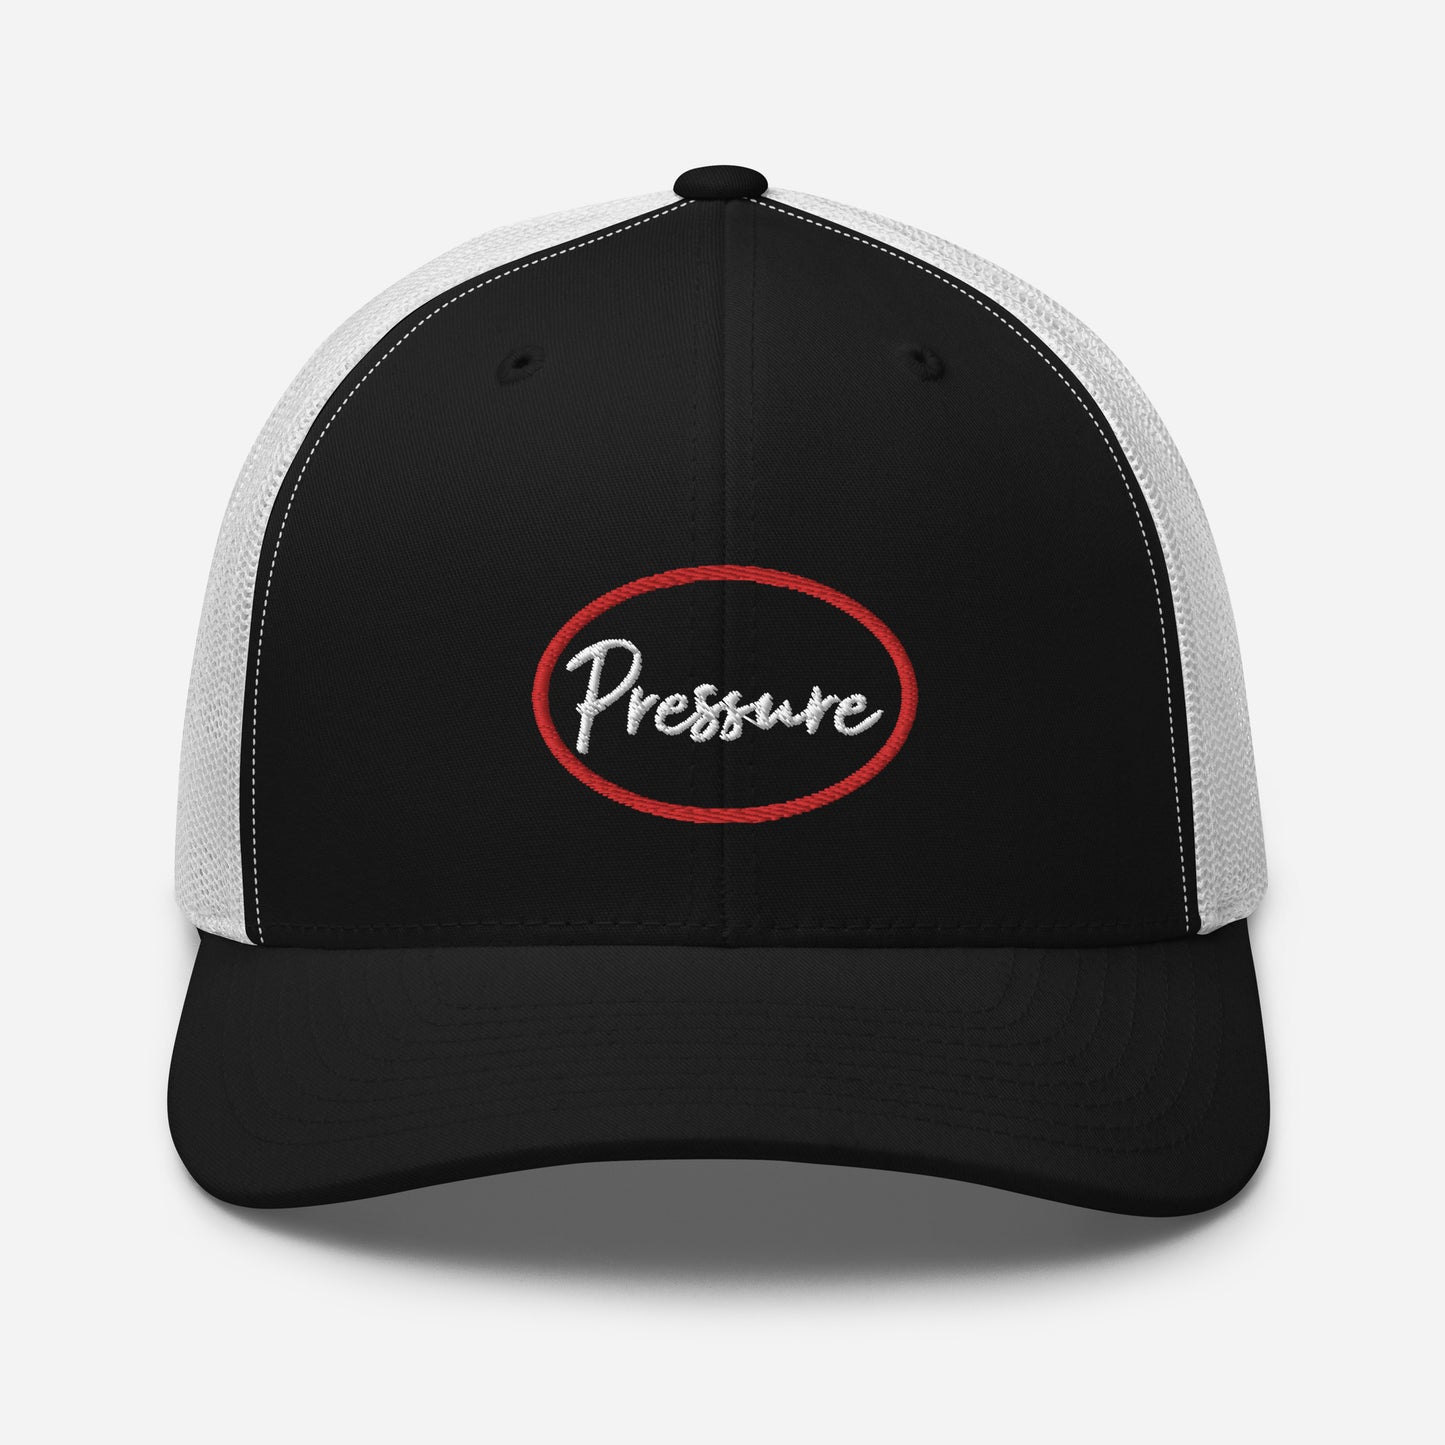 Pressure Trucker Cap